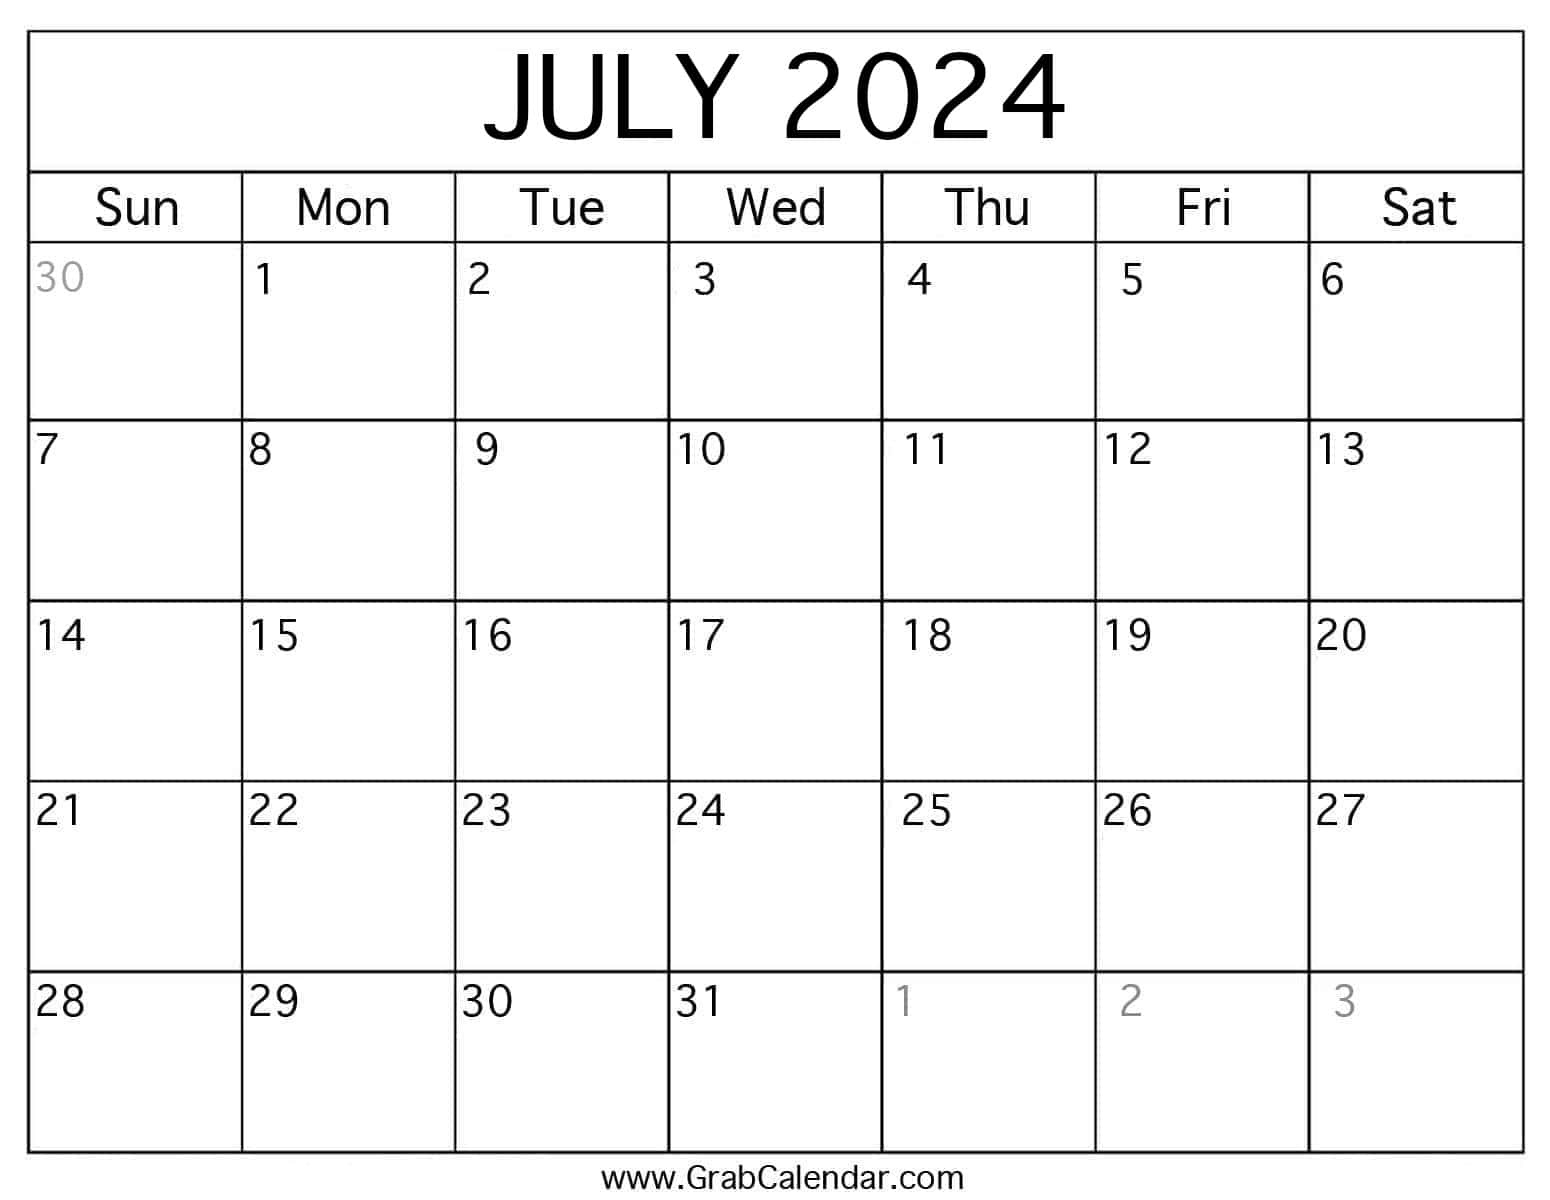 Printable July 2024 Calendar regarding Picture of July 2024 Calendar